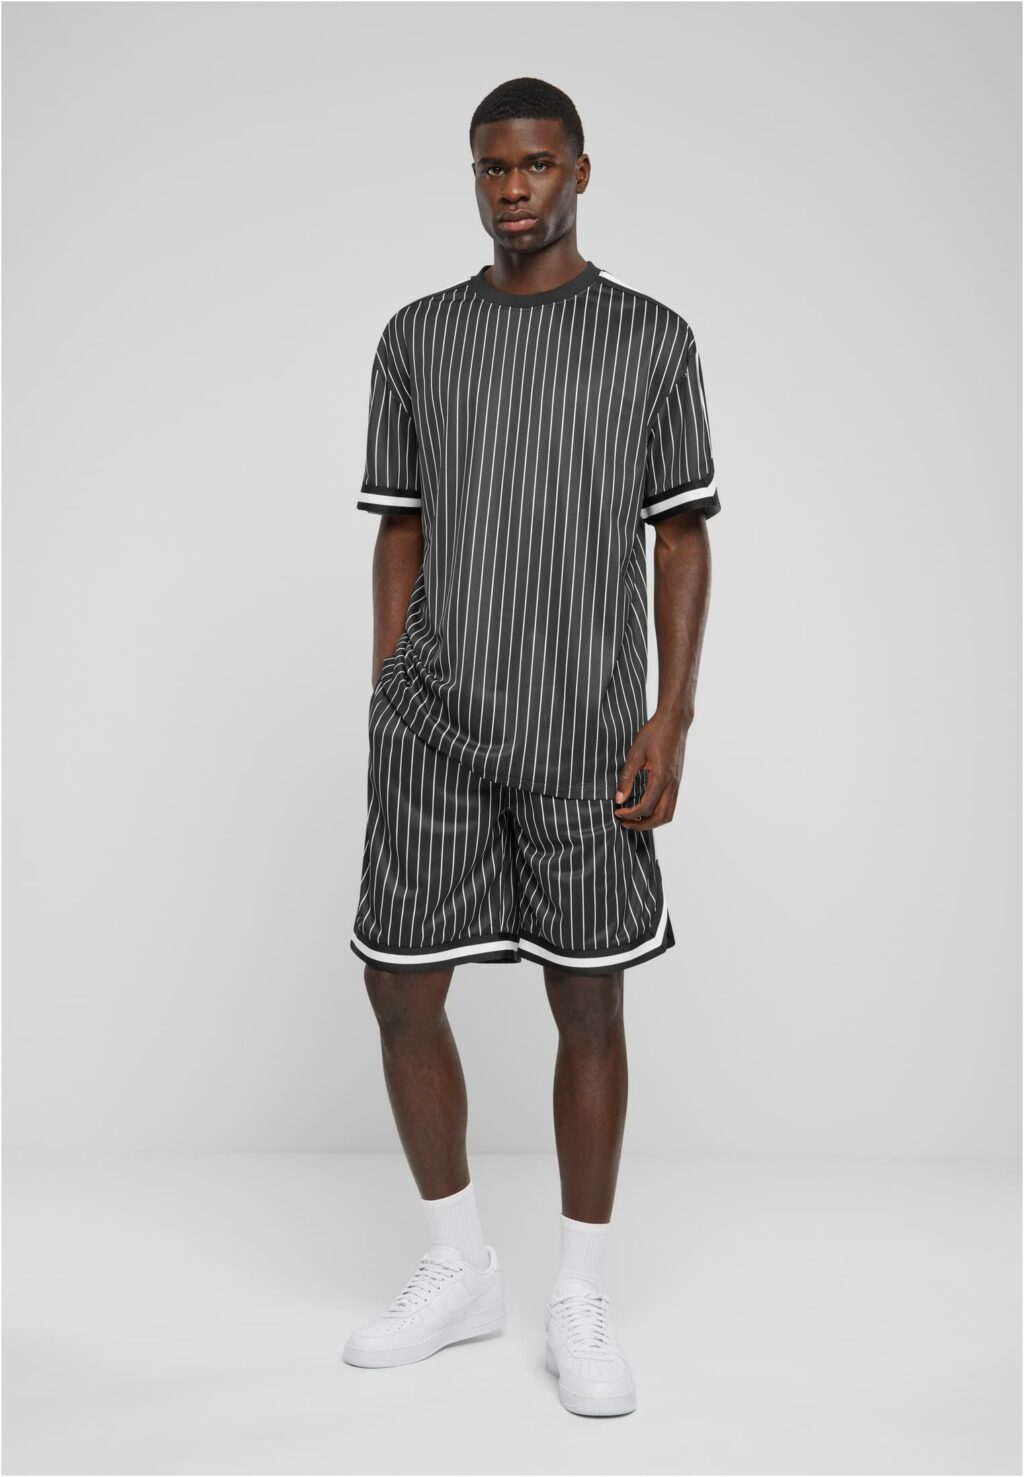 Urban Classics Striped Mesh Shorts black/white TB6667